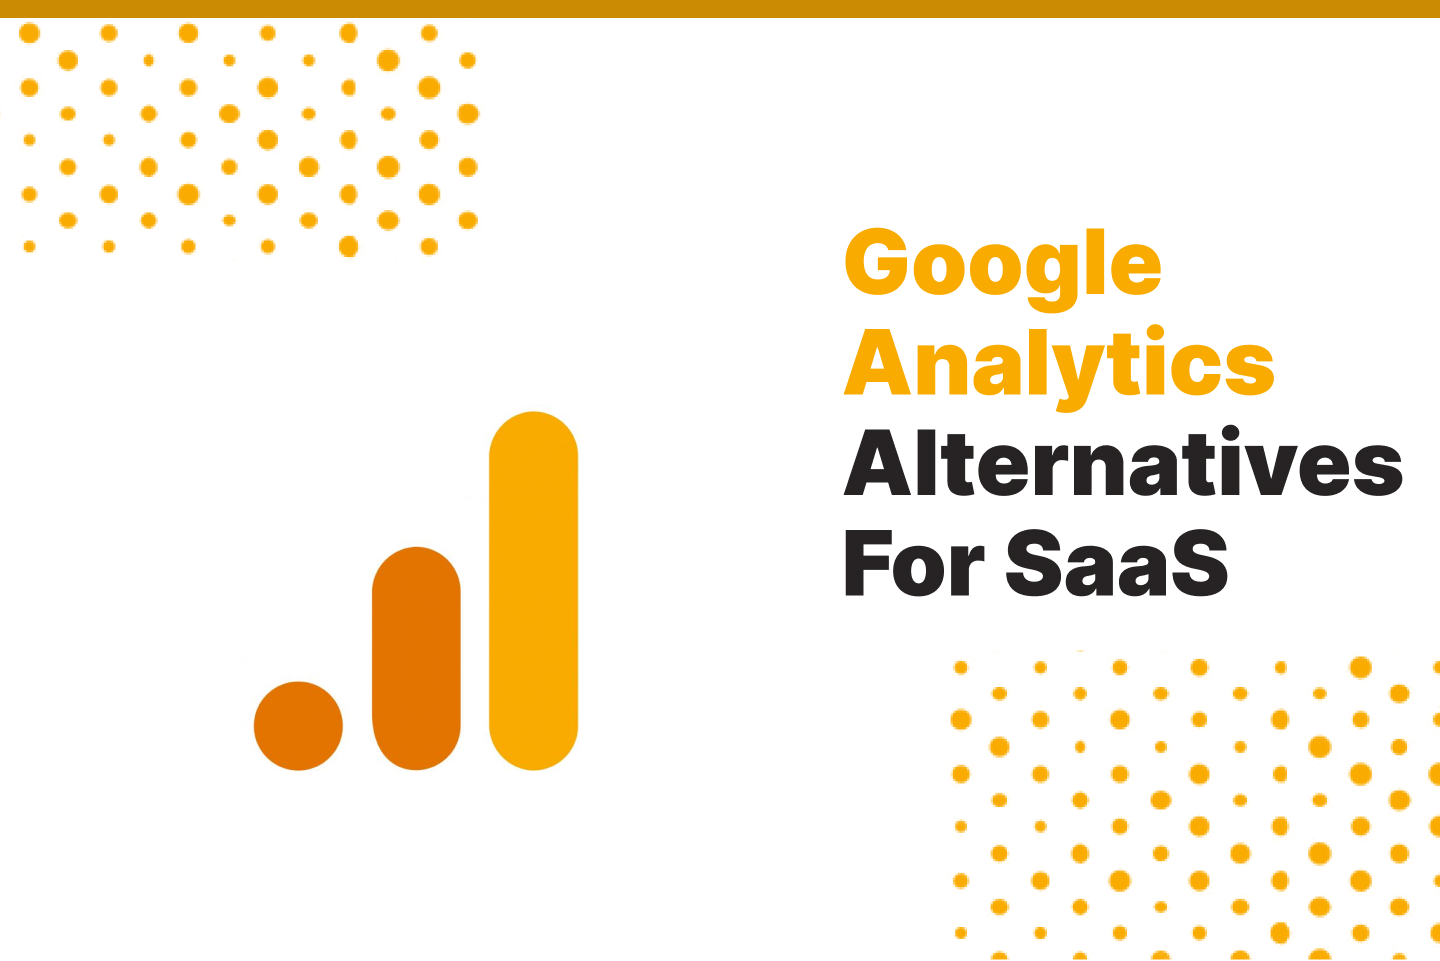 Google Analytics Alternatives: 9 Different Tools To Track Your Metrics